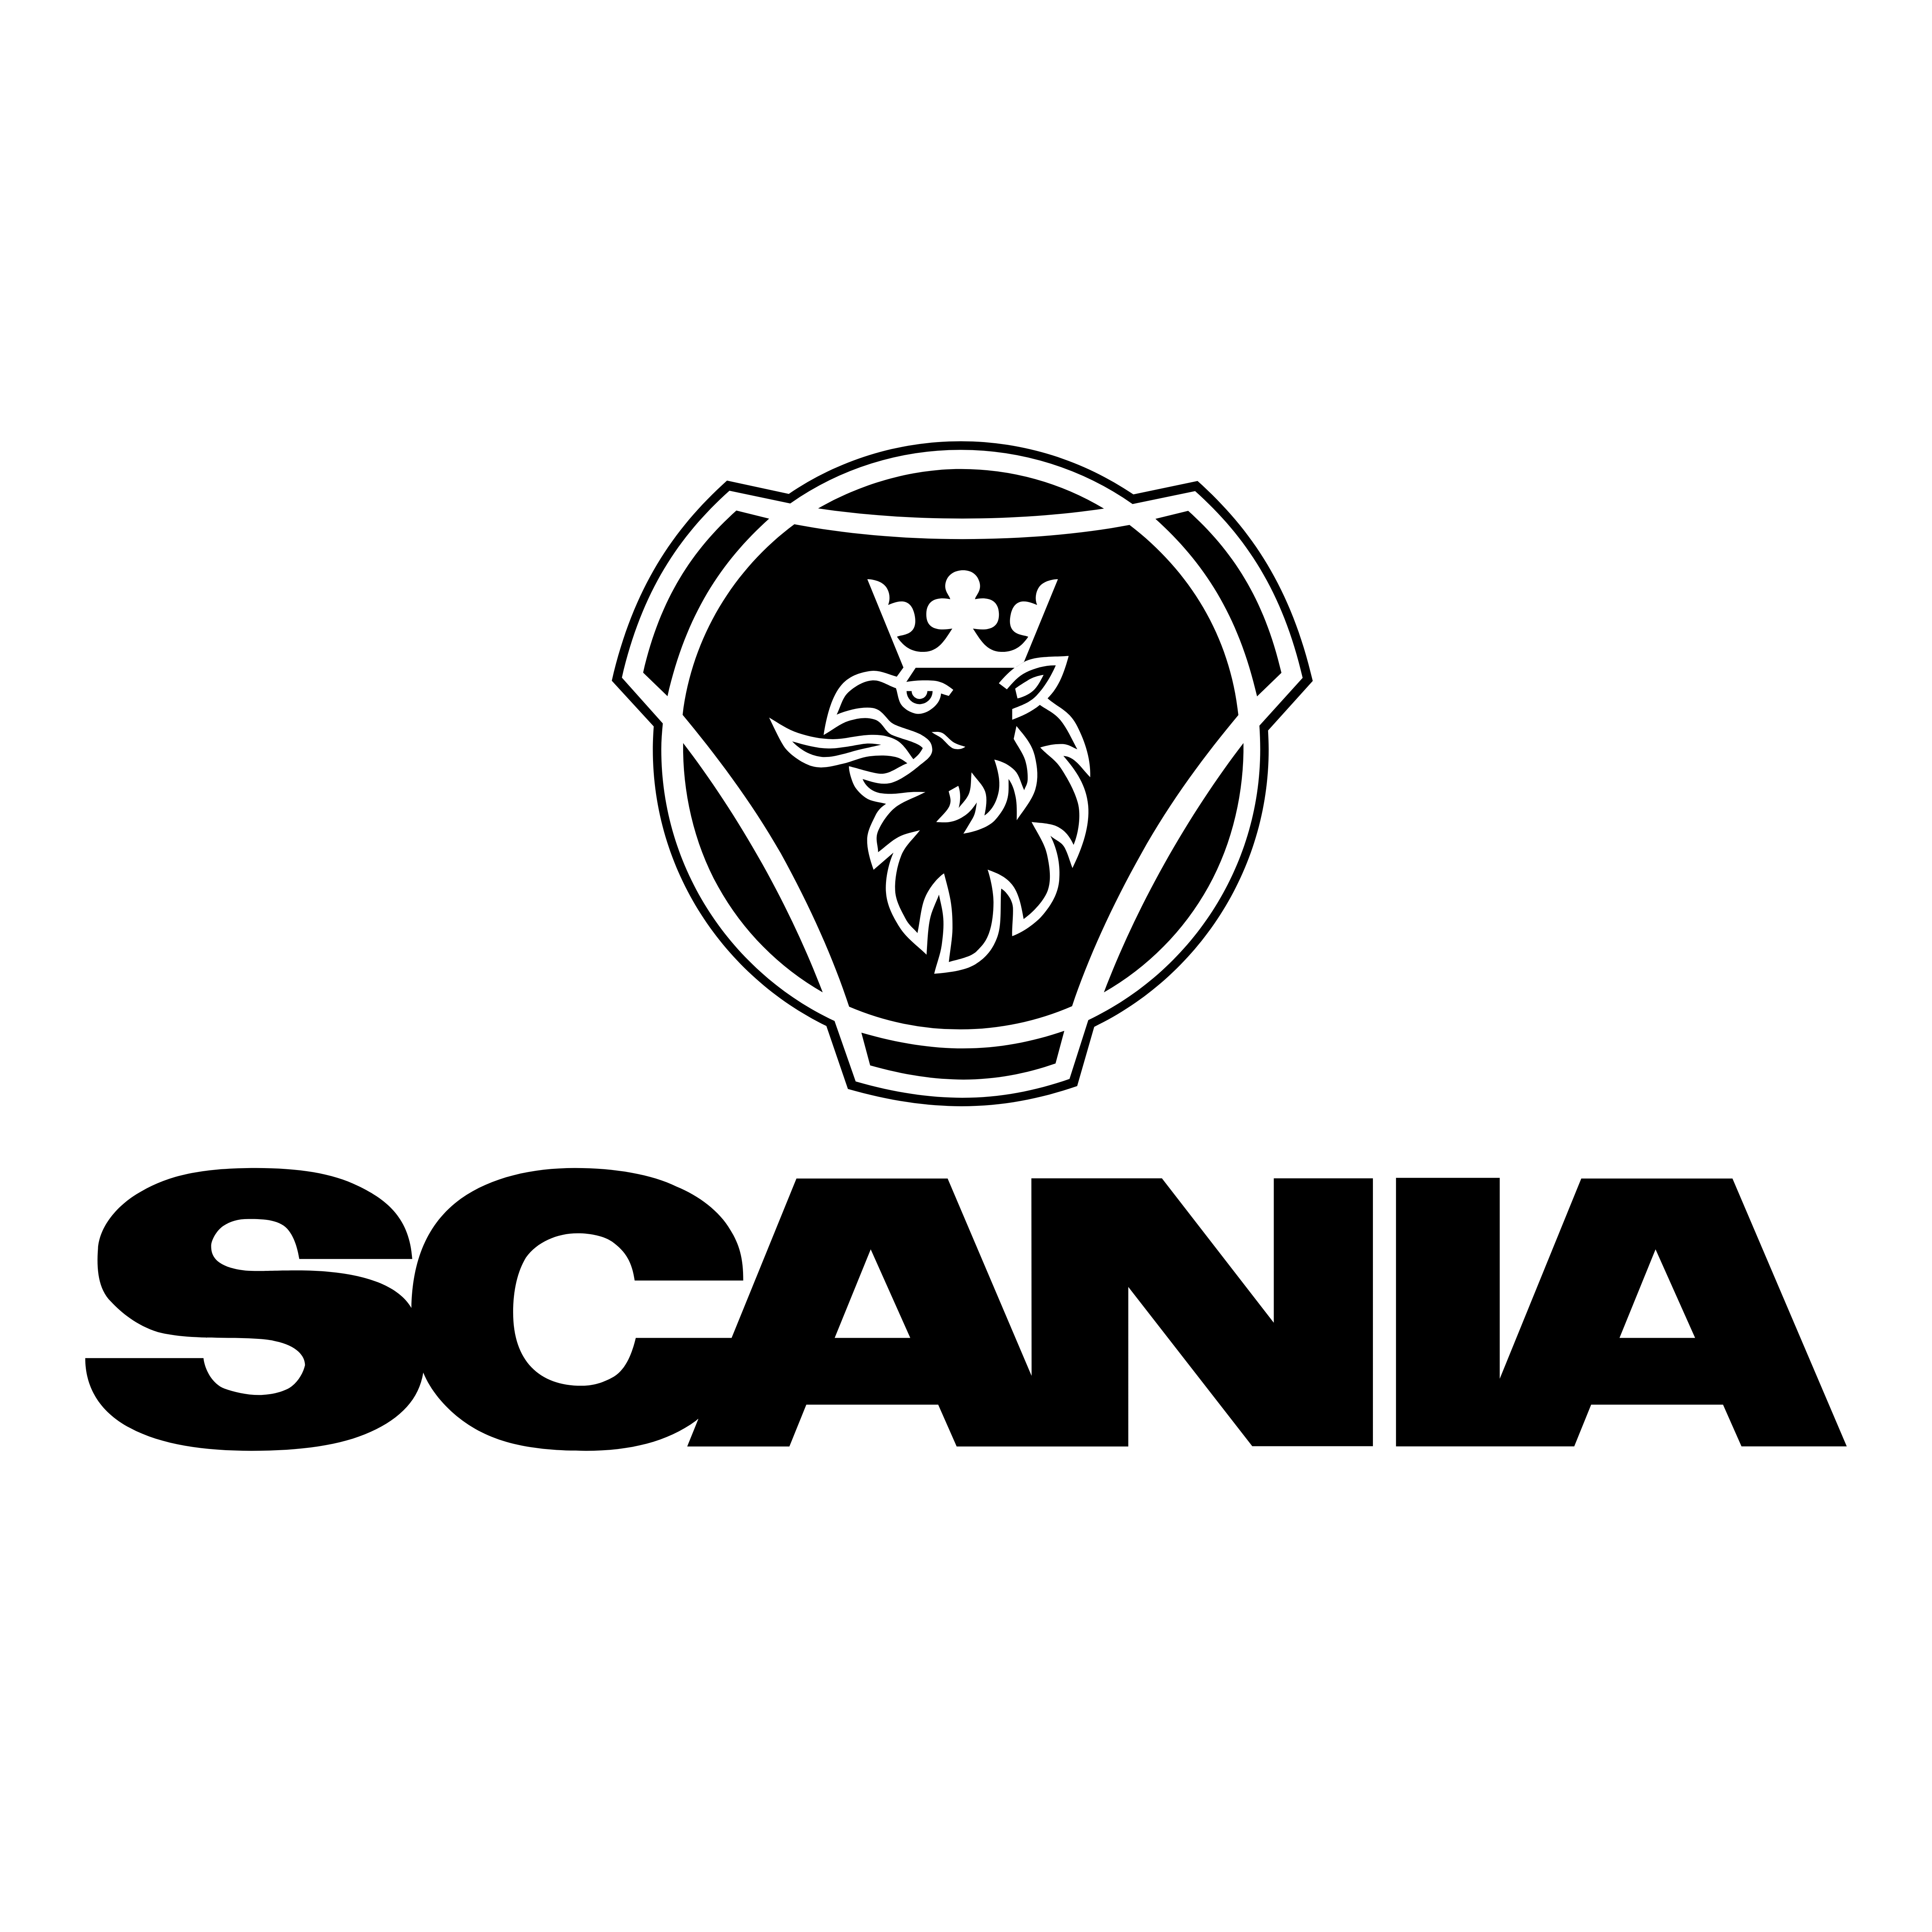 Scania – Logos Download